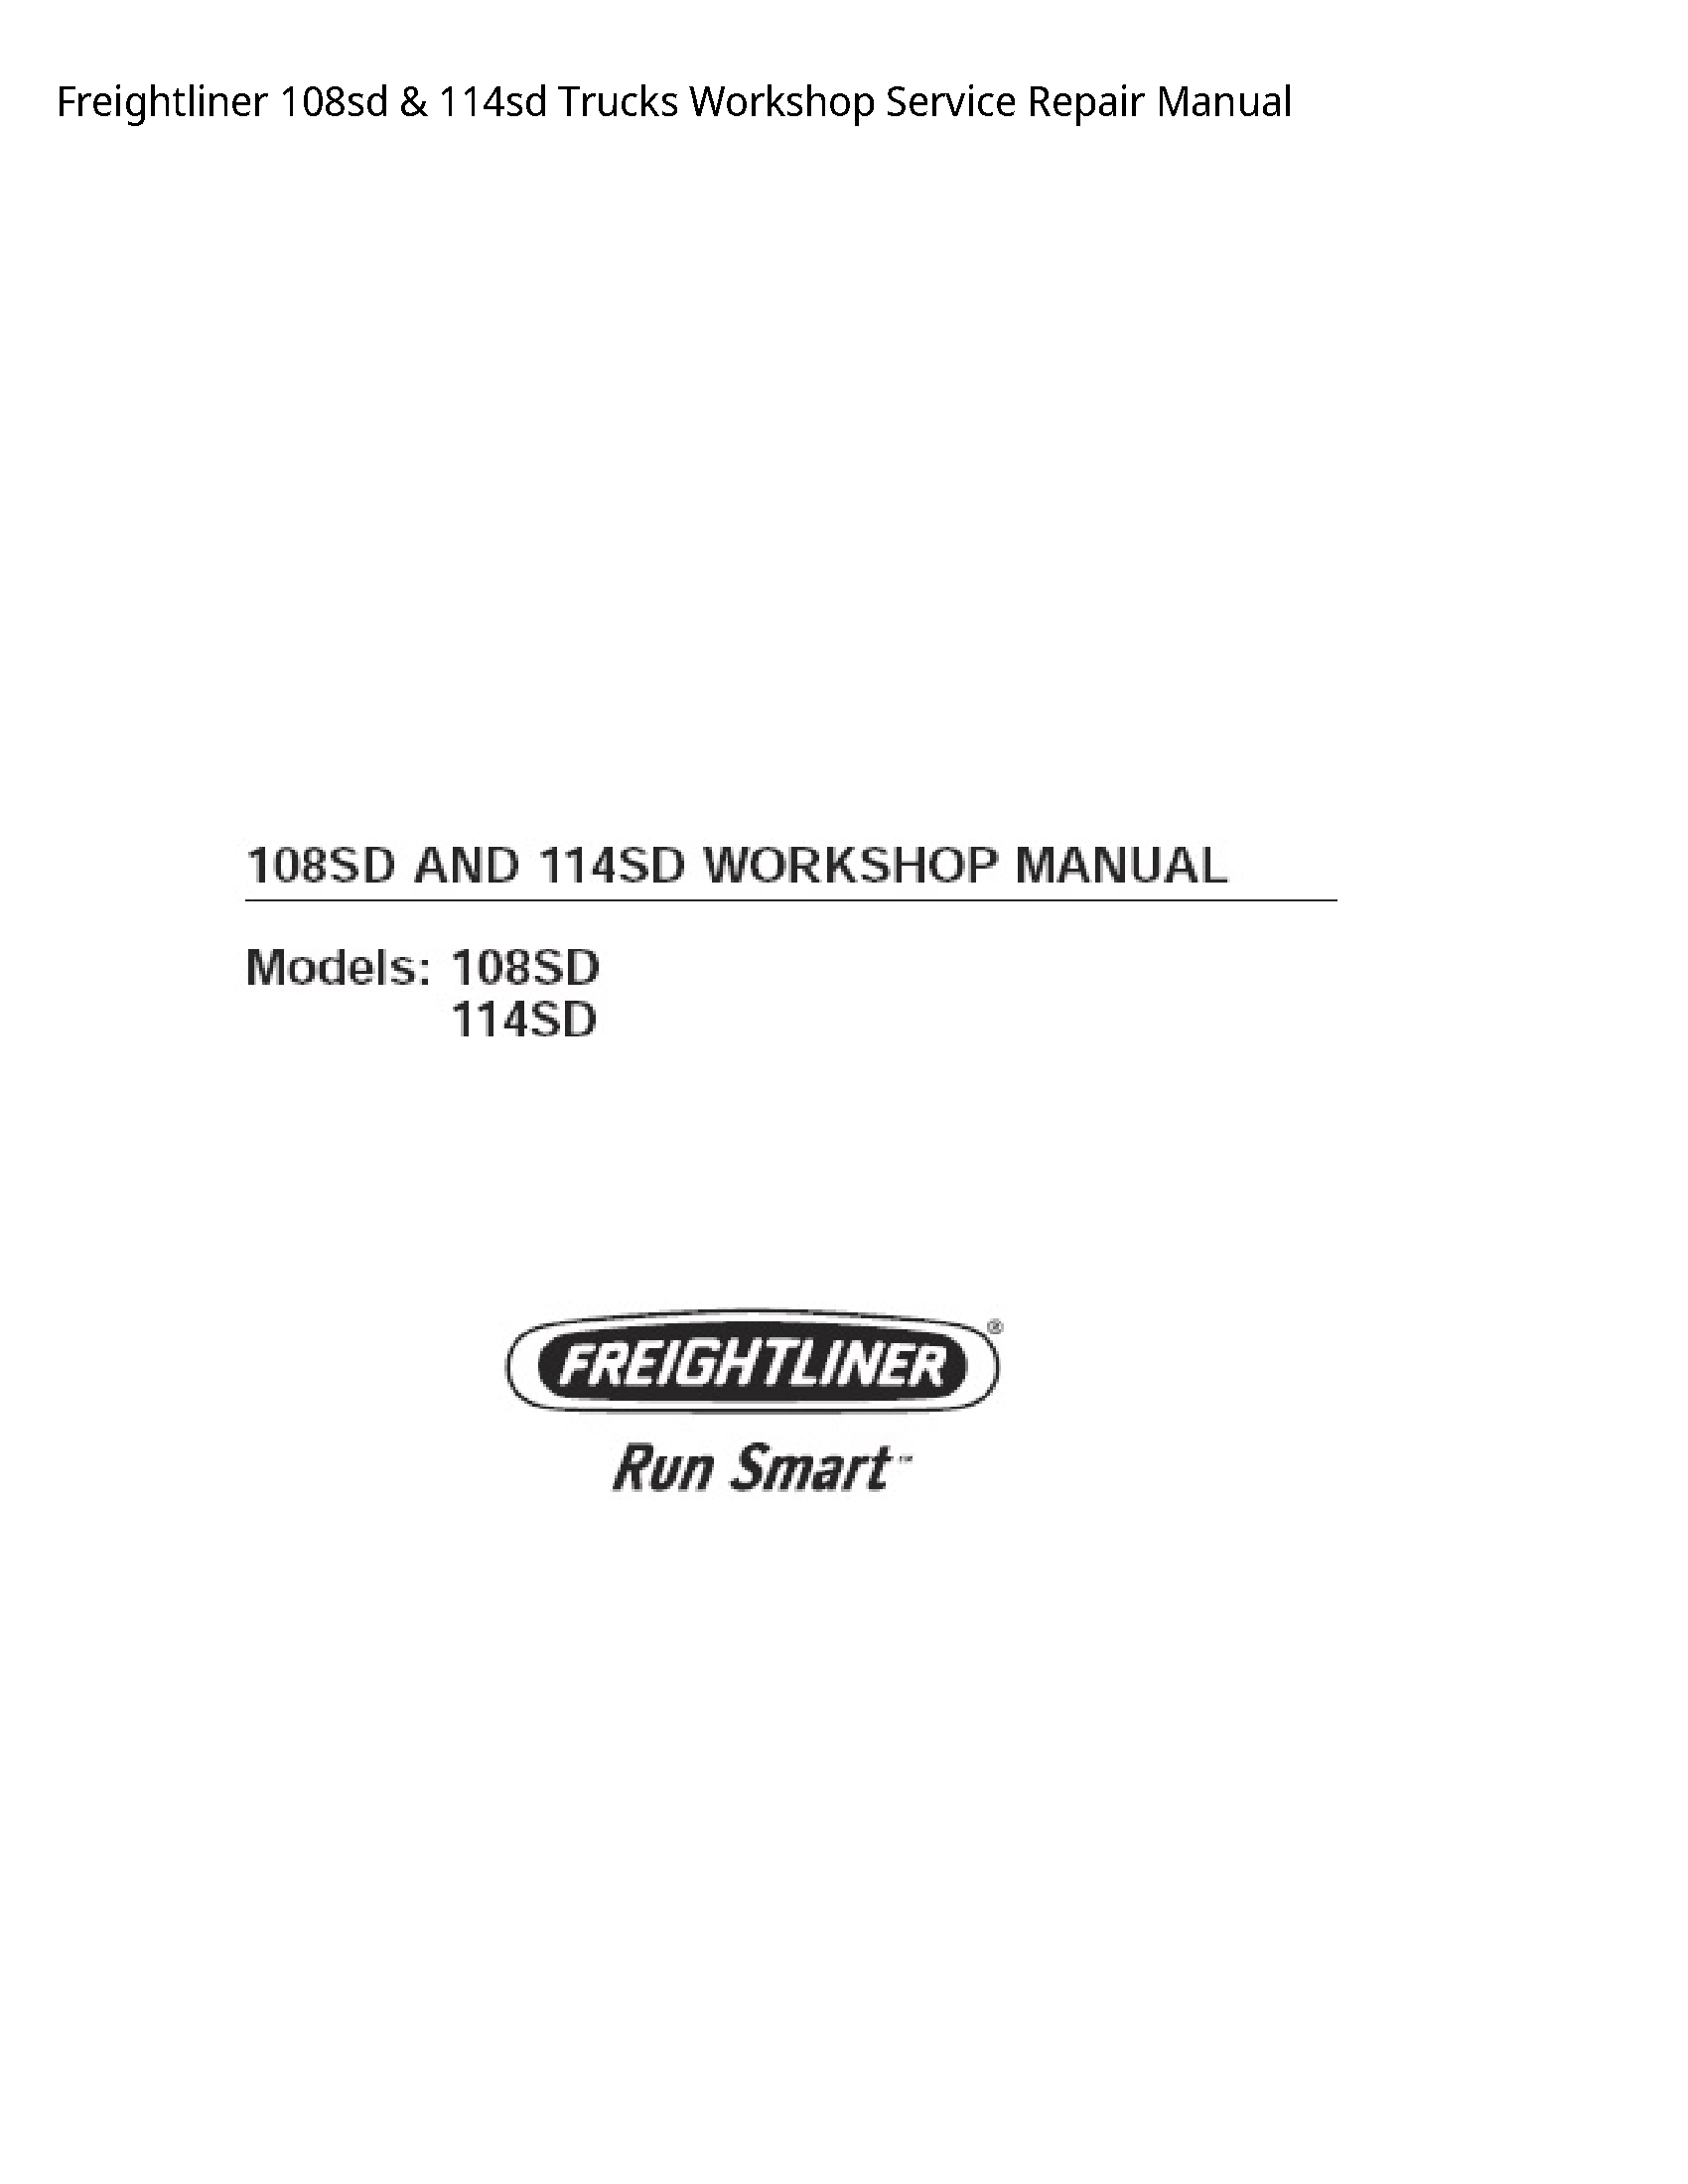 Freightliner 108sd Trucks manual